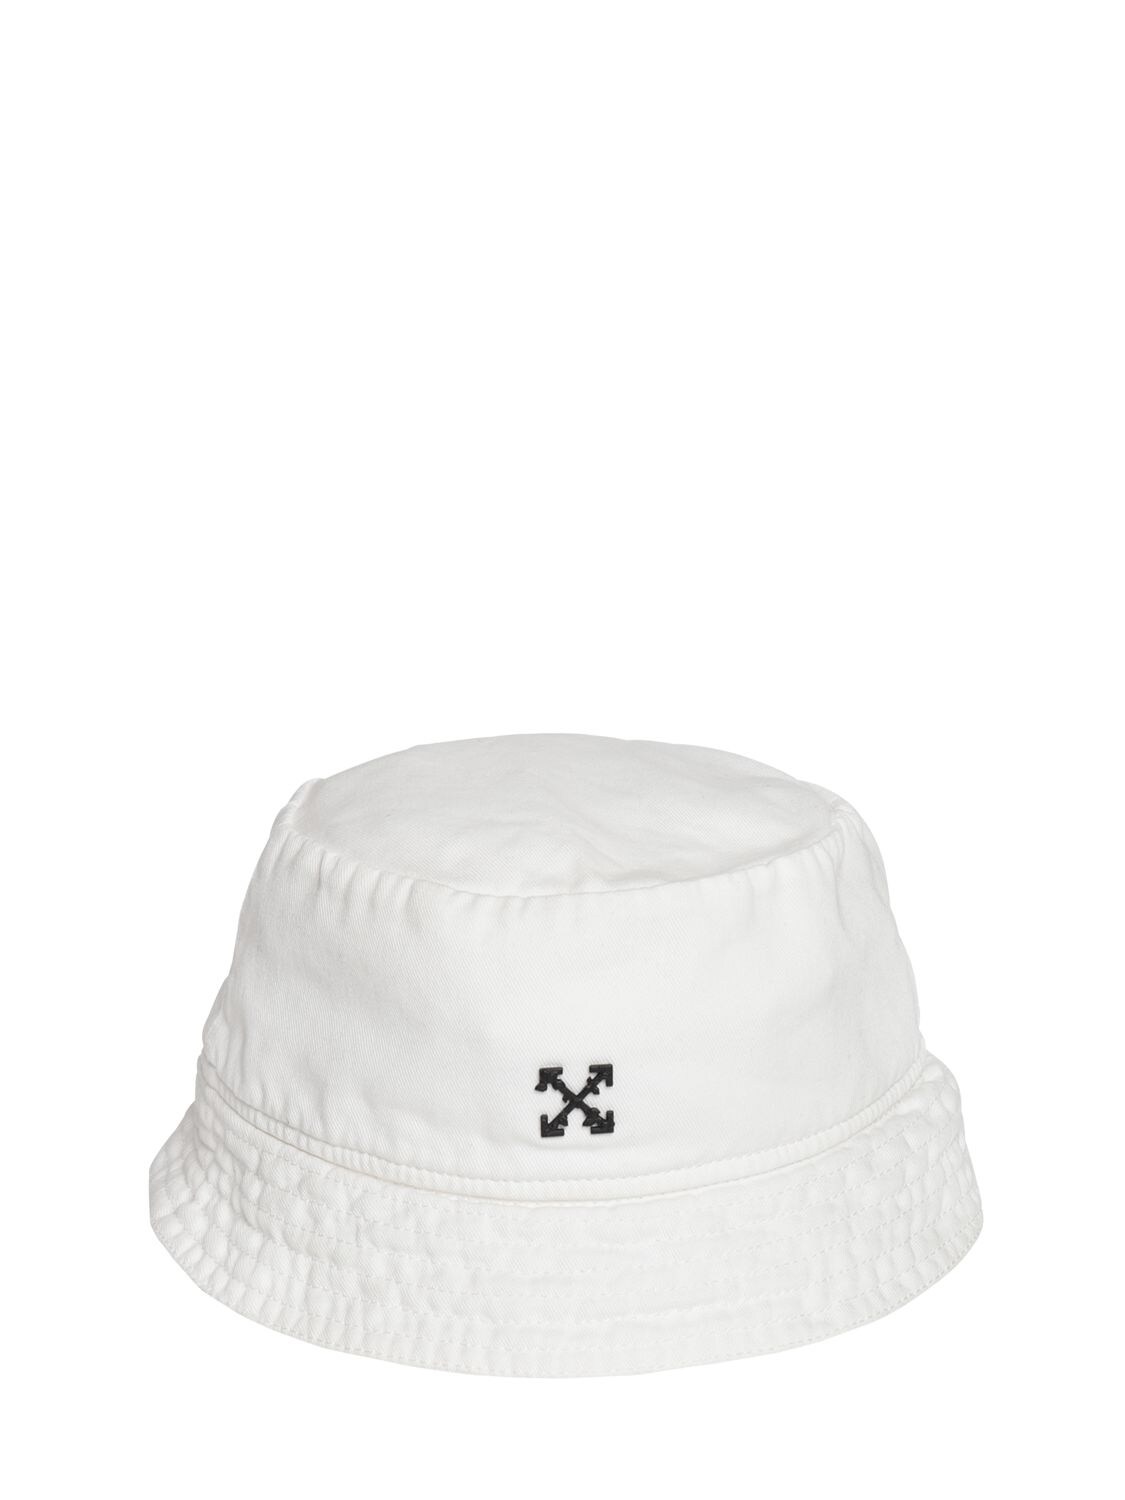 OFF-WHITE LOGO纯棉帆布渔夫帽,71IJS5002-MDIXMA2